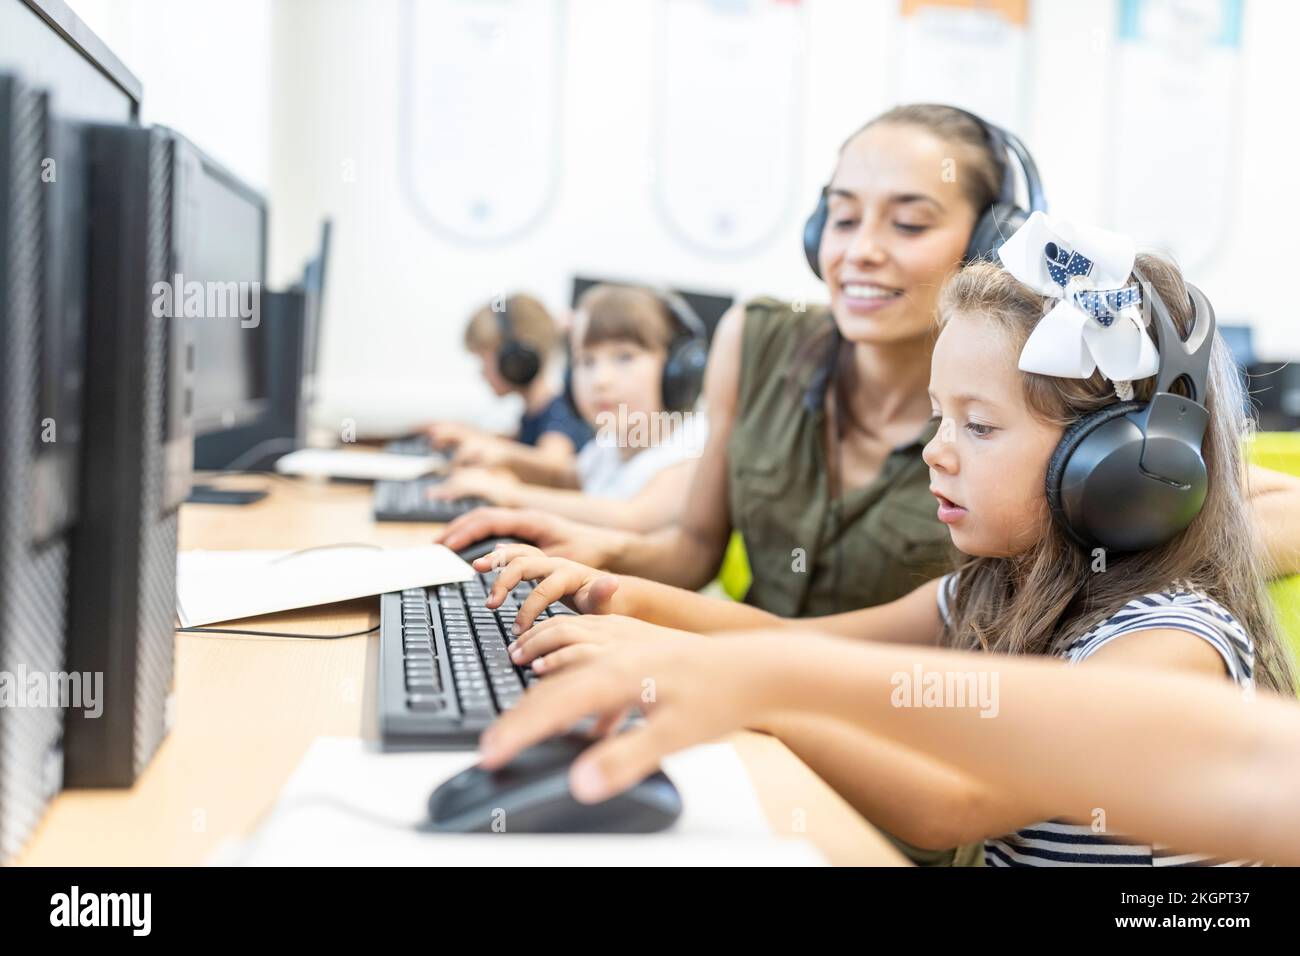 Girl wearing headphones using computer with teacher in class at school Stock Photo